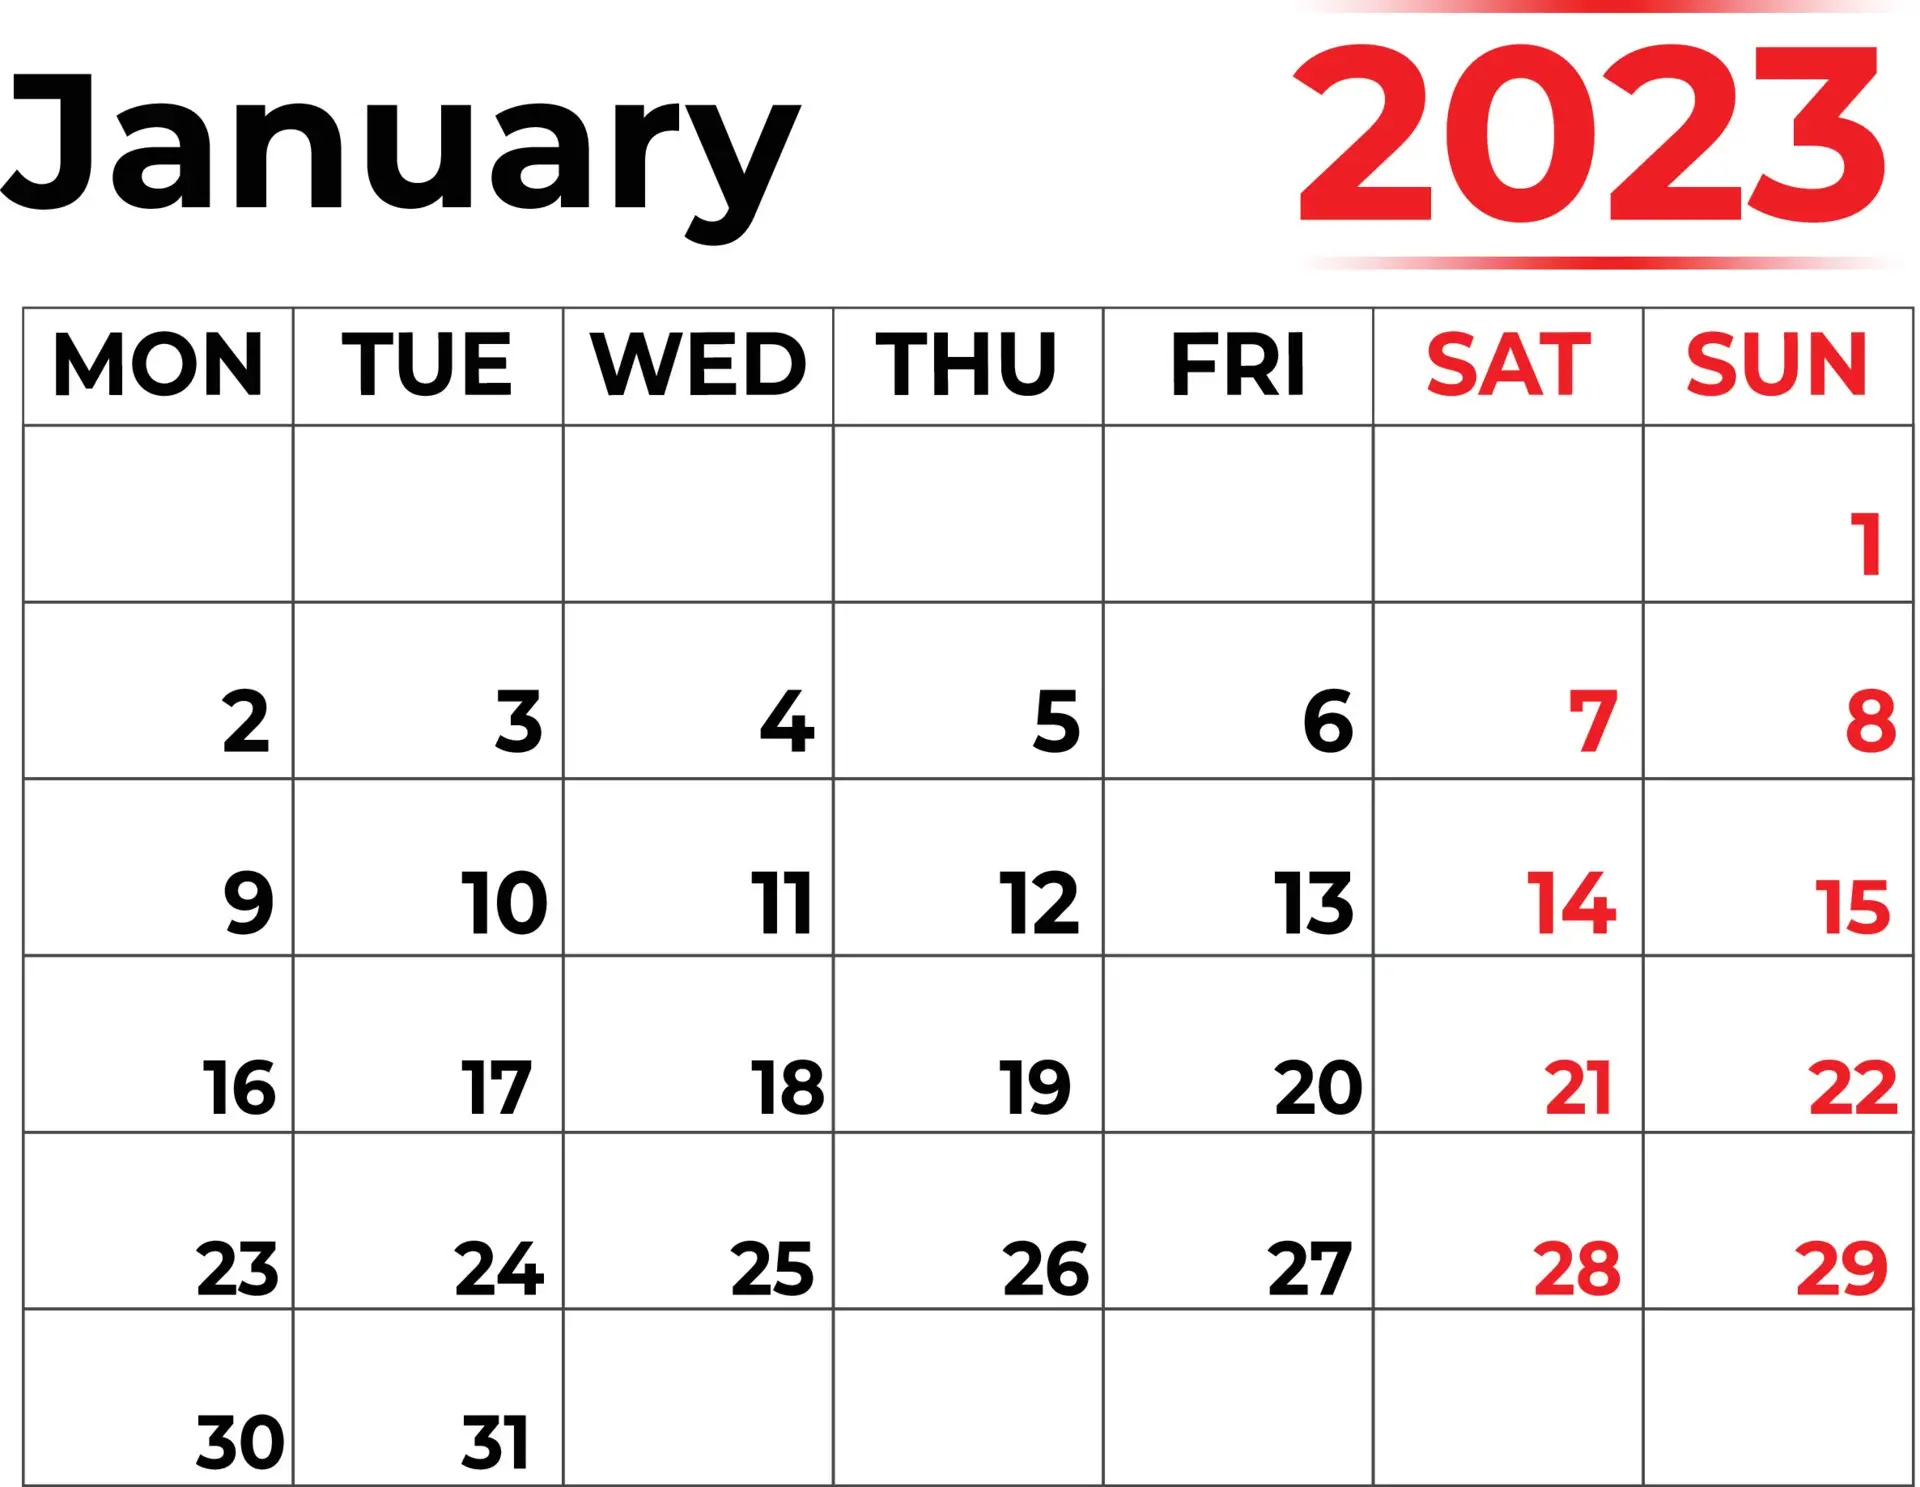 January Calendar 2023 Free